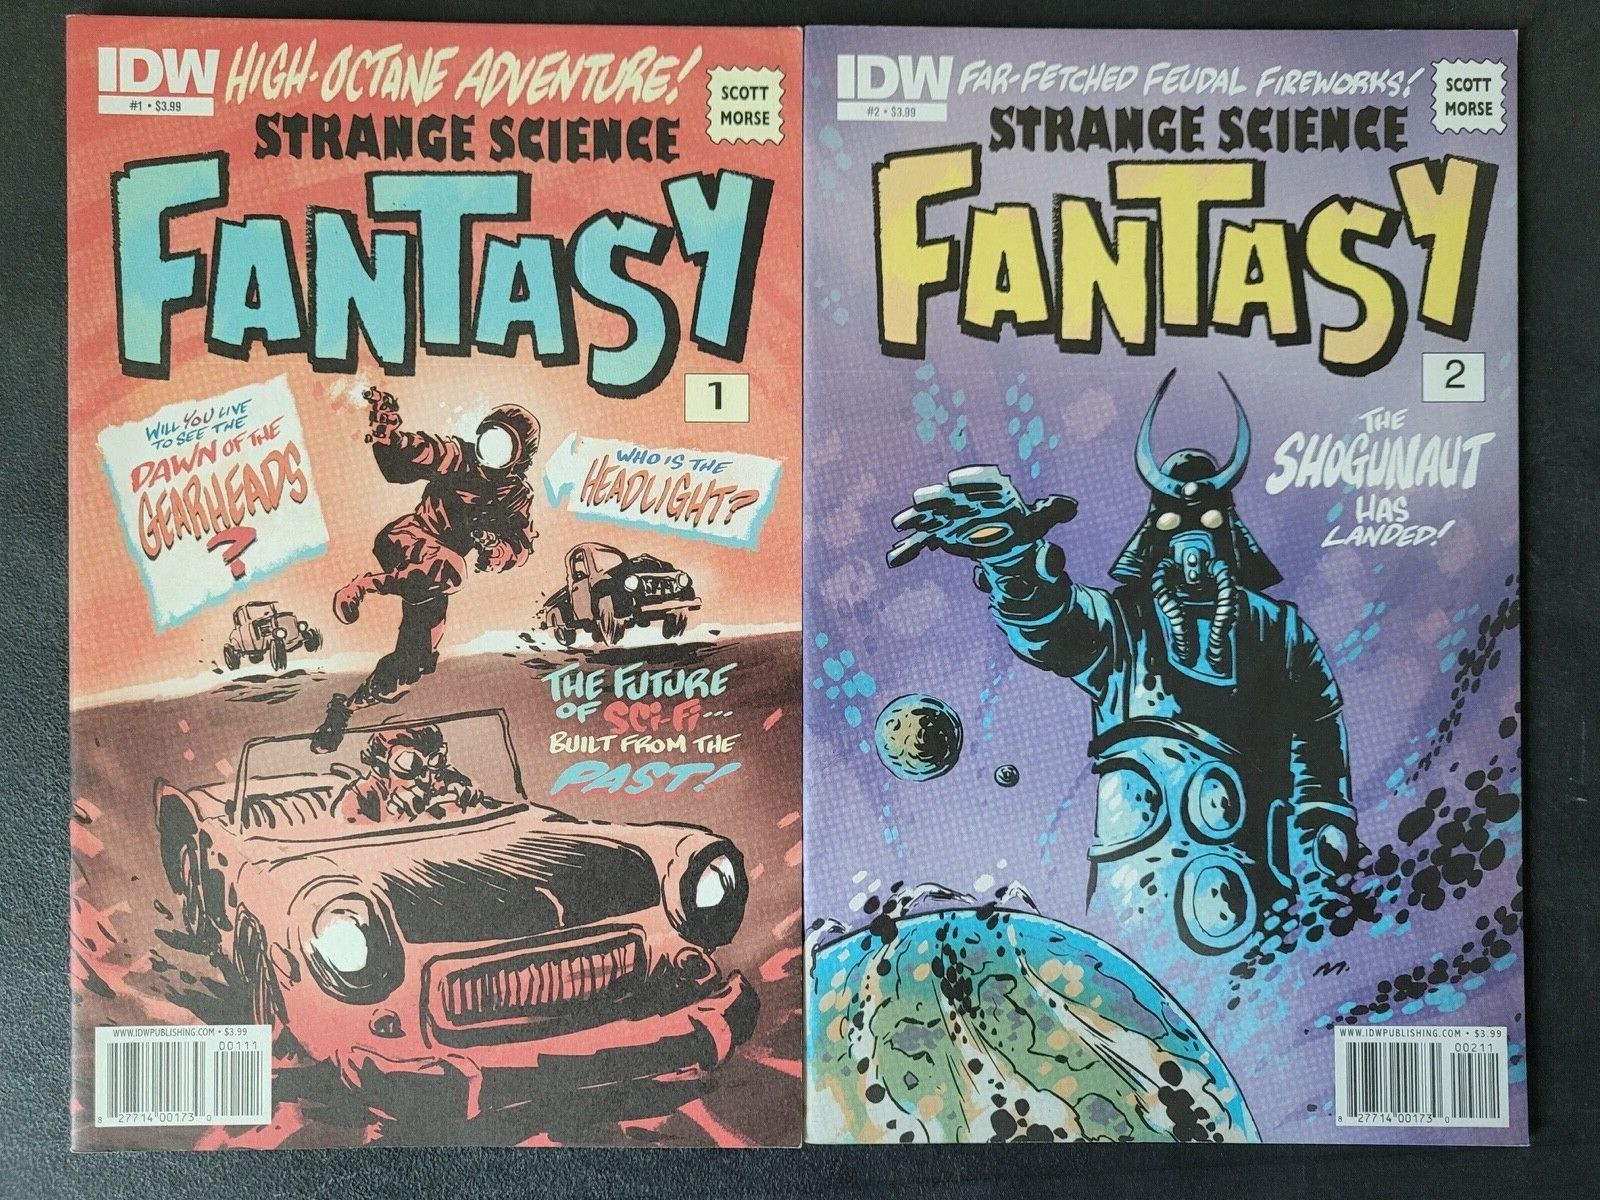 STRANGE SCIENCE FANTASY #1 & 2 (2010) IDW COMICS 1ST PRINT SCOTT MORSE STORY+ART